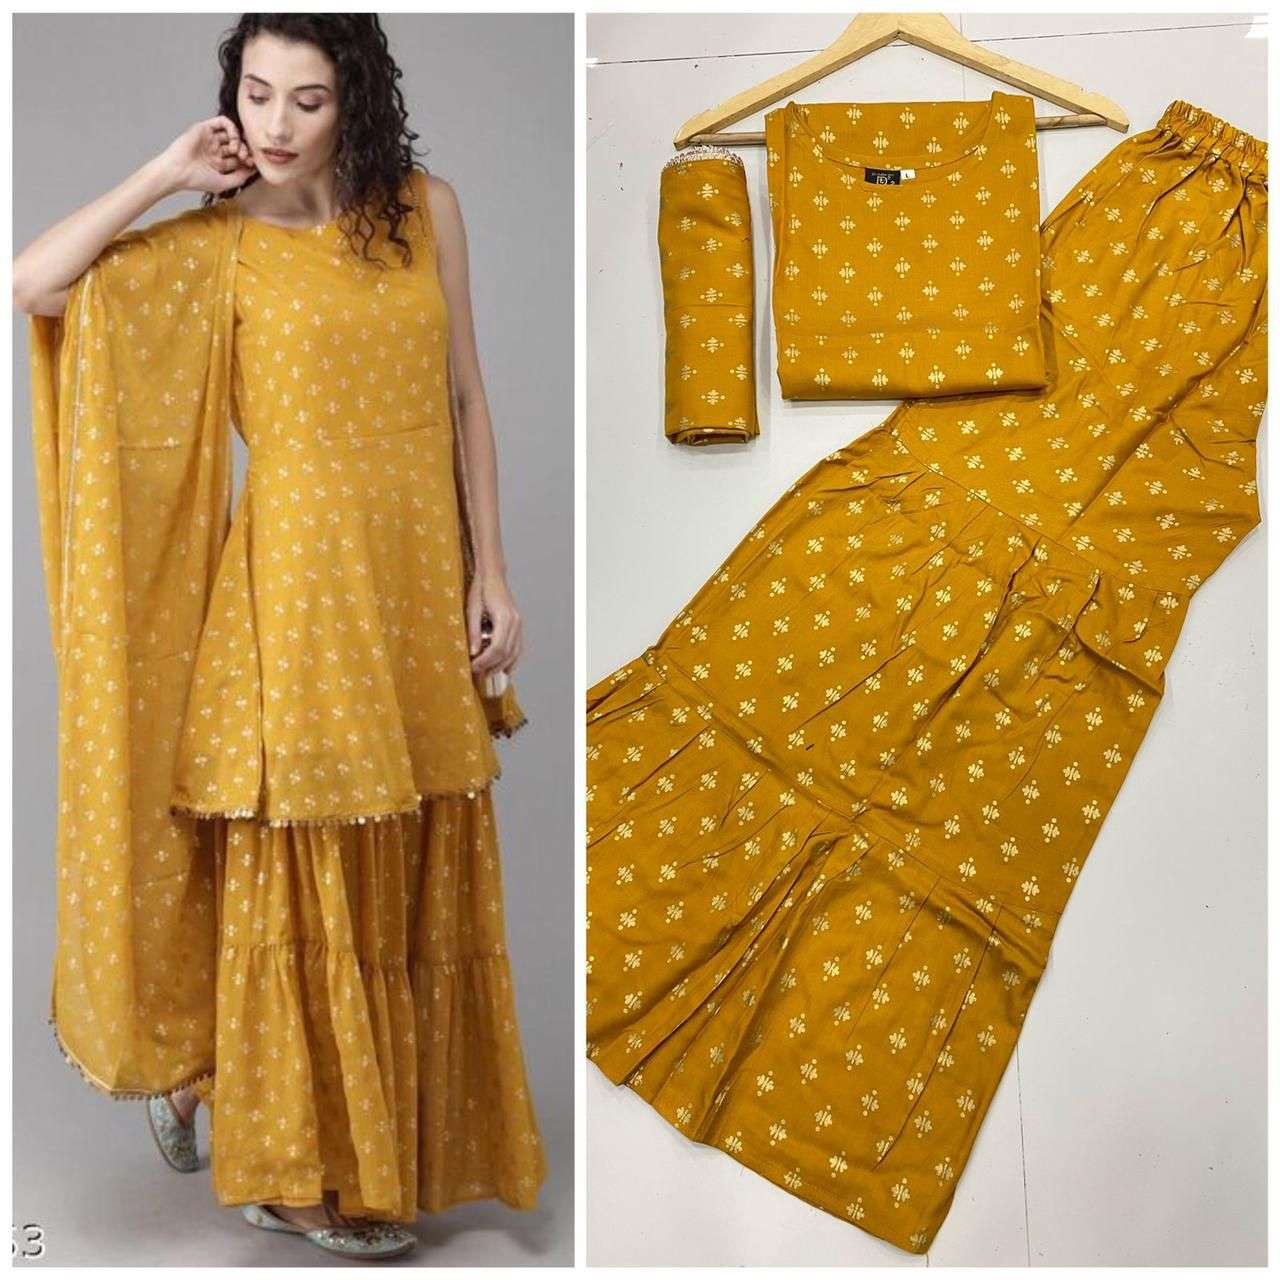 Jainex Rayon cotton with foil print kurti with sharara colle...